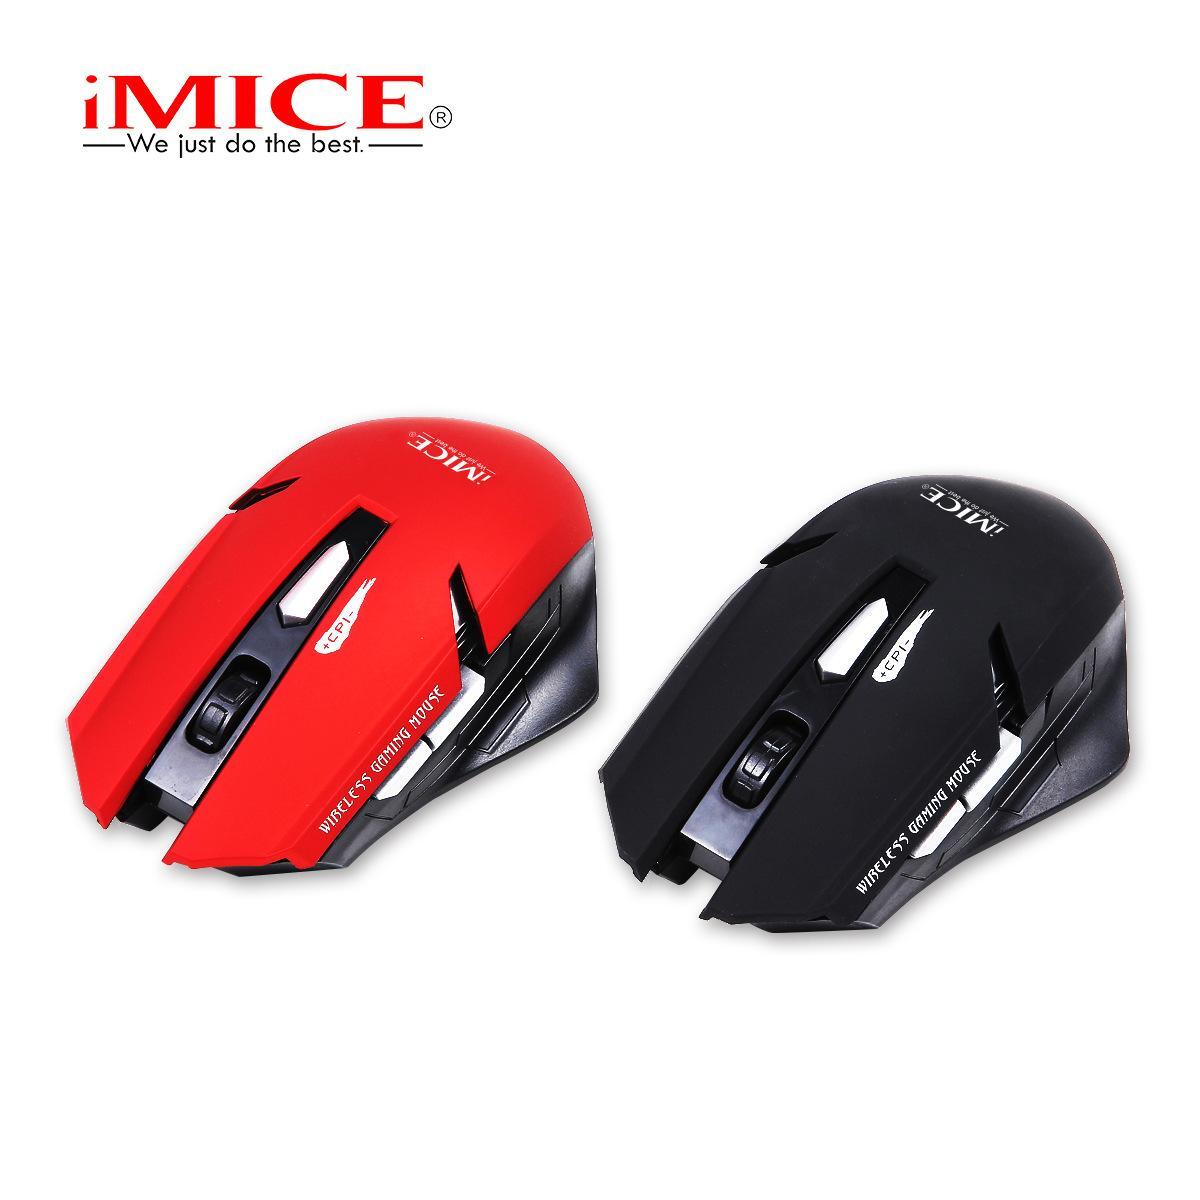 Chuột máy tính - Mouse Wireless iMice E1700